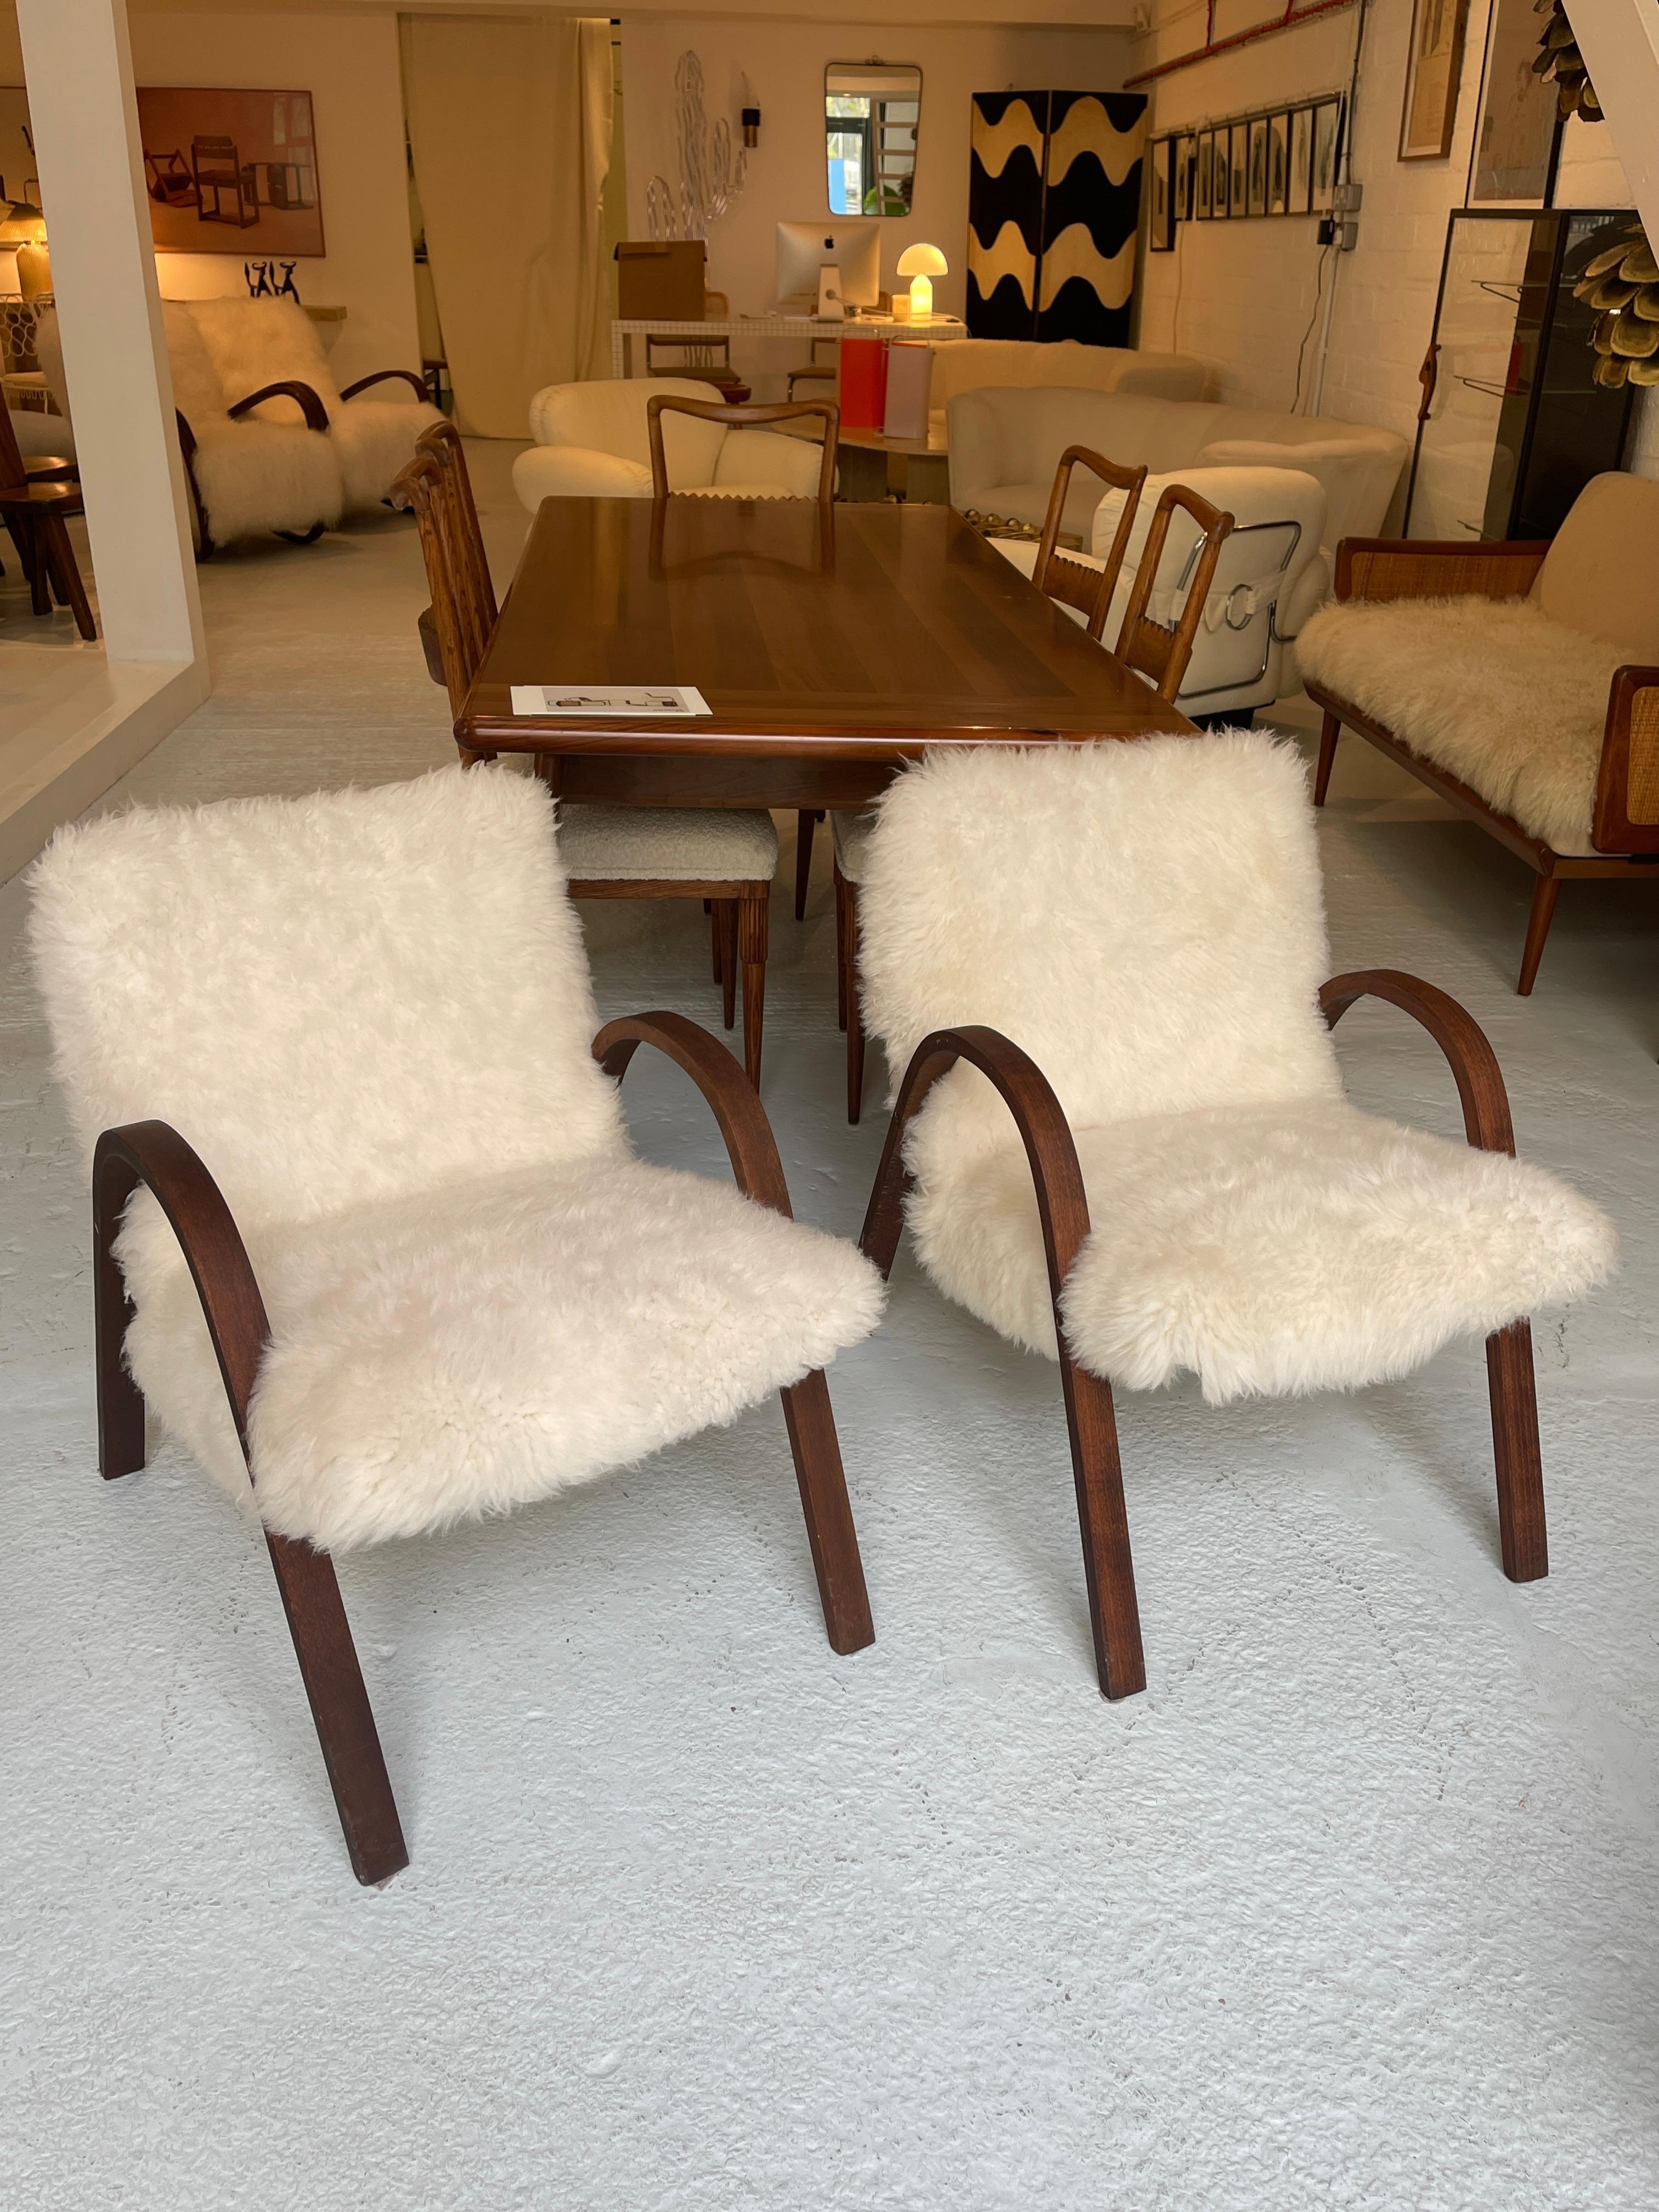 Handmade bow wood chairs with sheepskin upholstery.